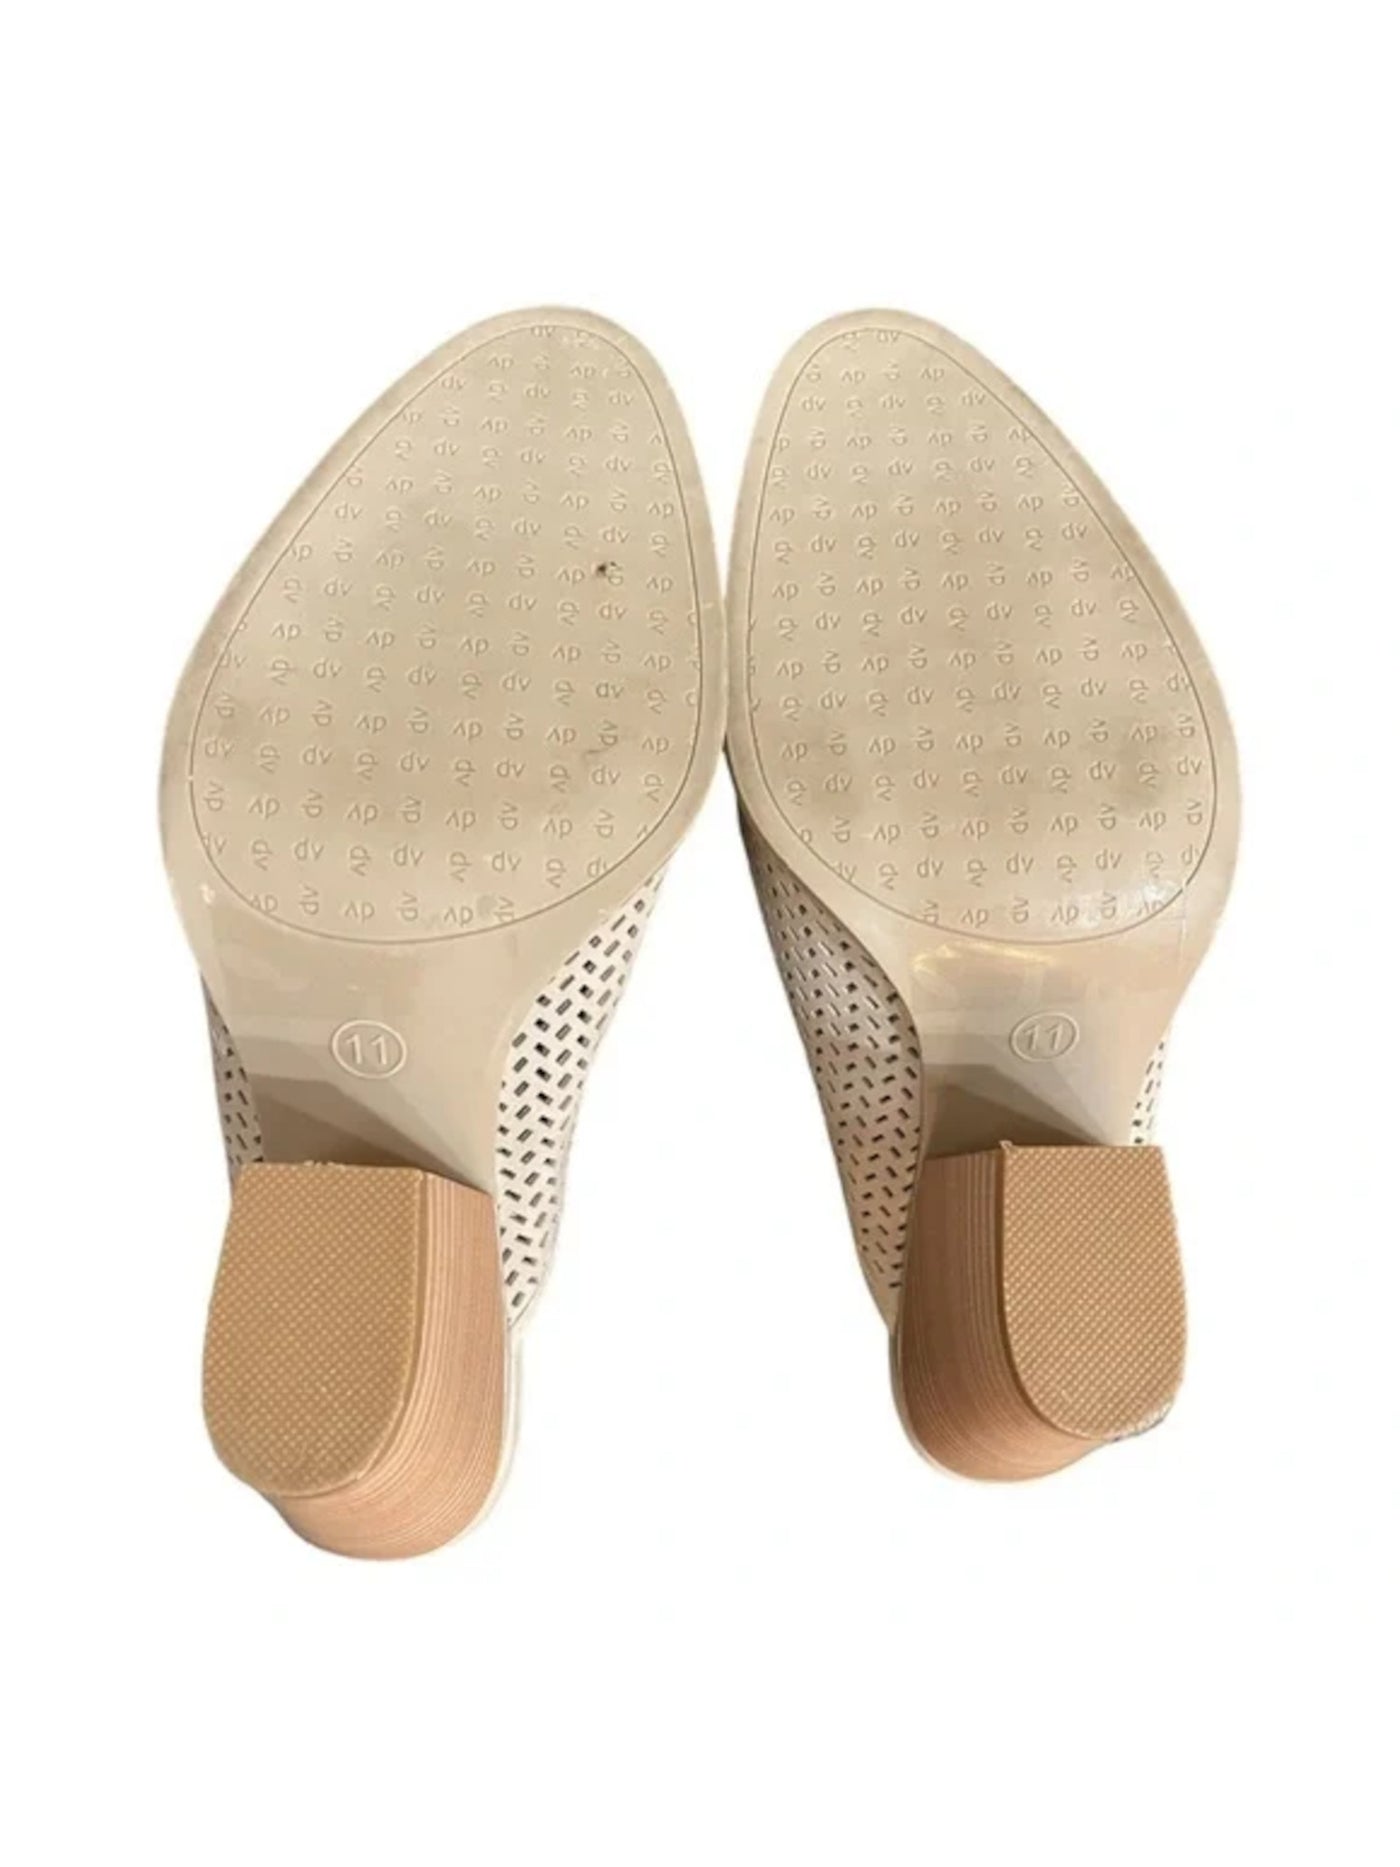 DOLCE VITA Womens Ivory Woven Padded Hudson Almond Toe Block Heel Slip On Leather Heeled Mules Shoes